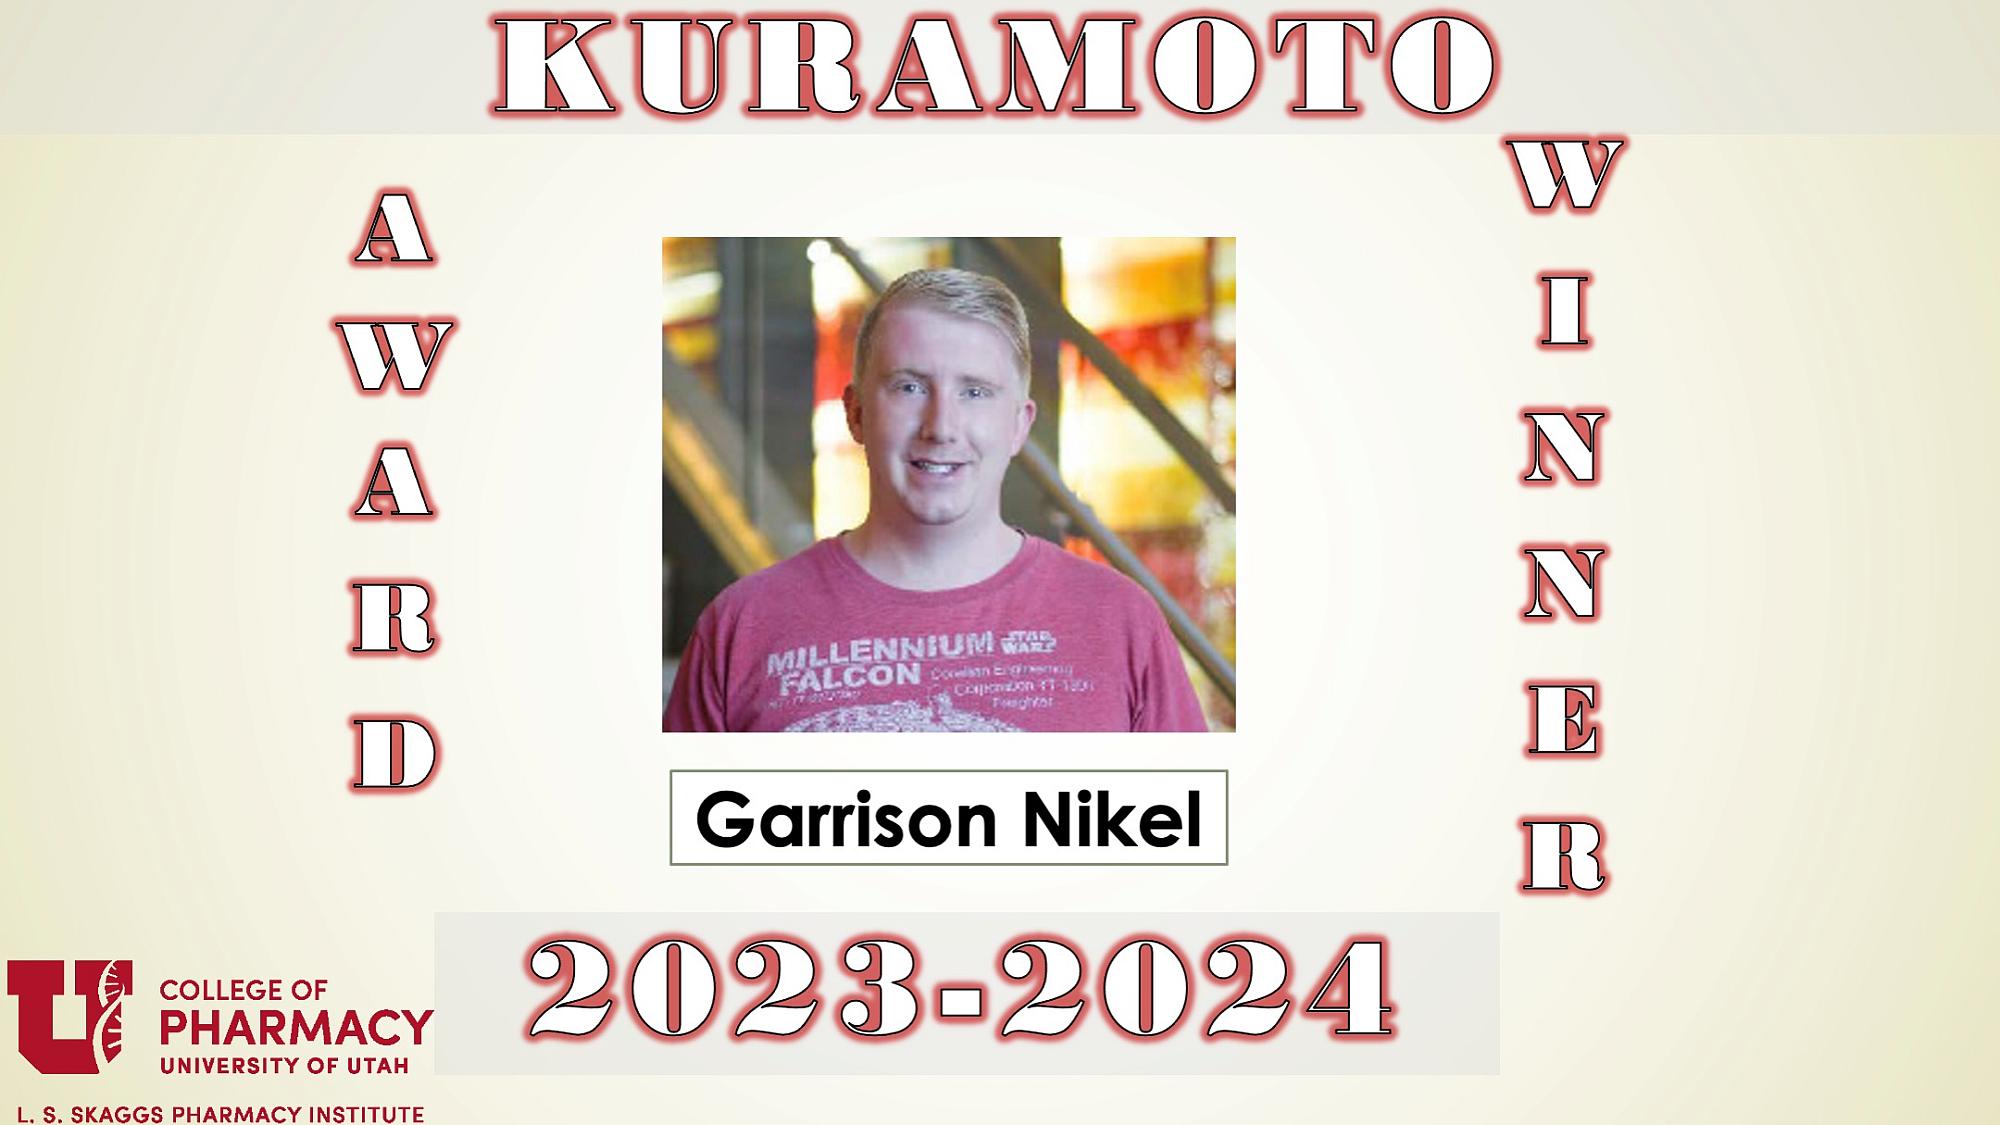 2023-2024 University of Utah College of Pharmacy Kuramoto Fellowship Awardee, Garrison Nikel